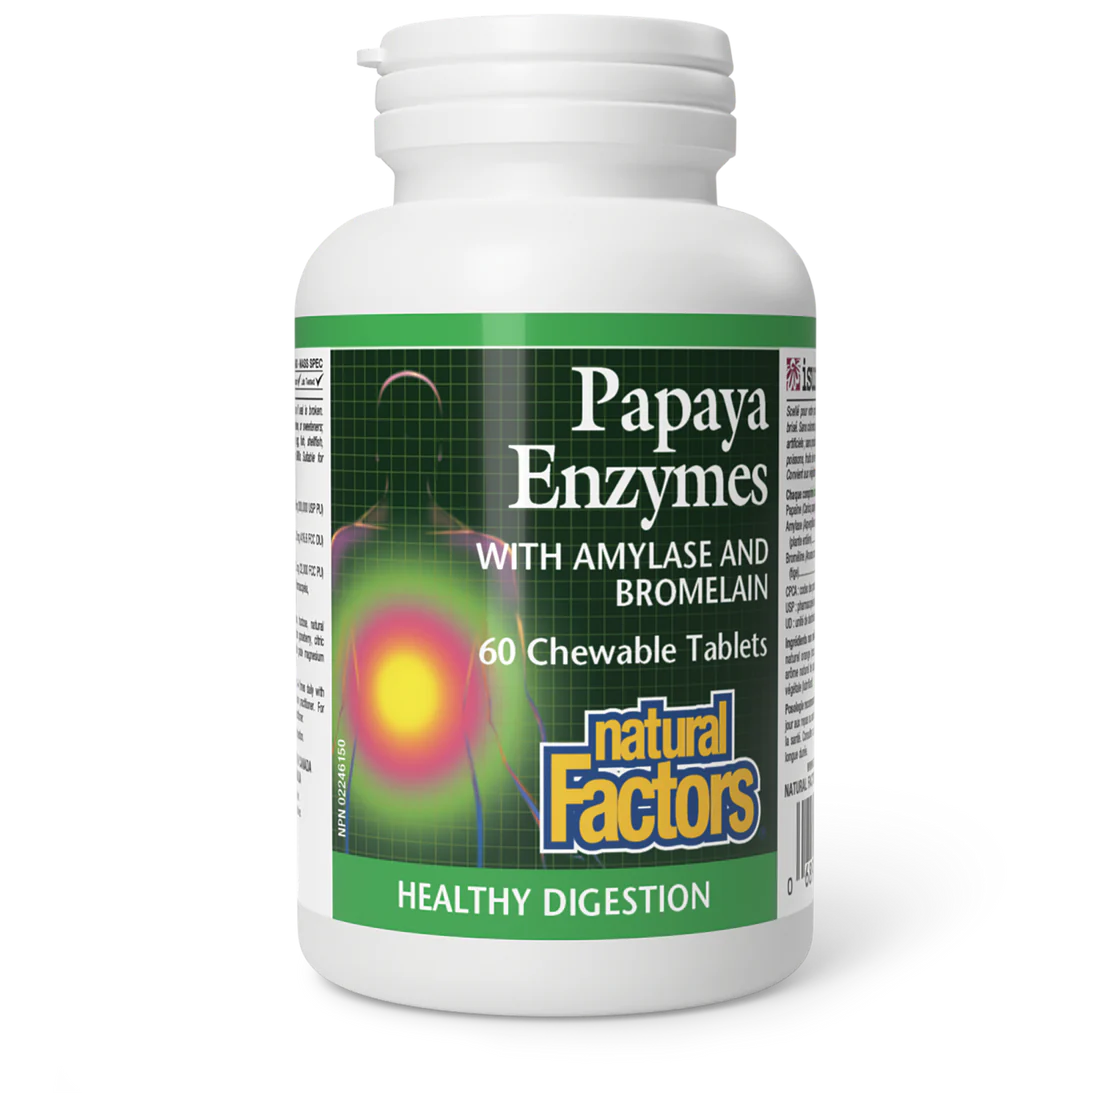 Natural Factors Papaya Enzymes with Amylase and Bromelain